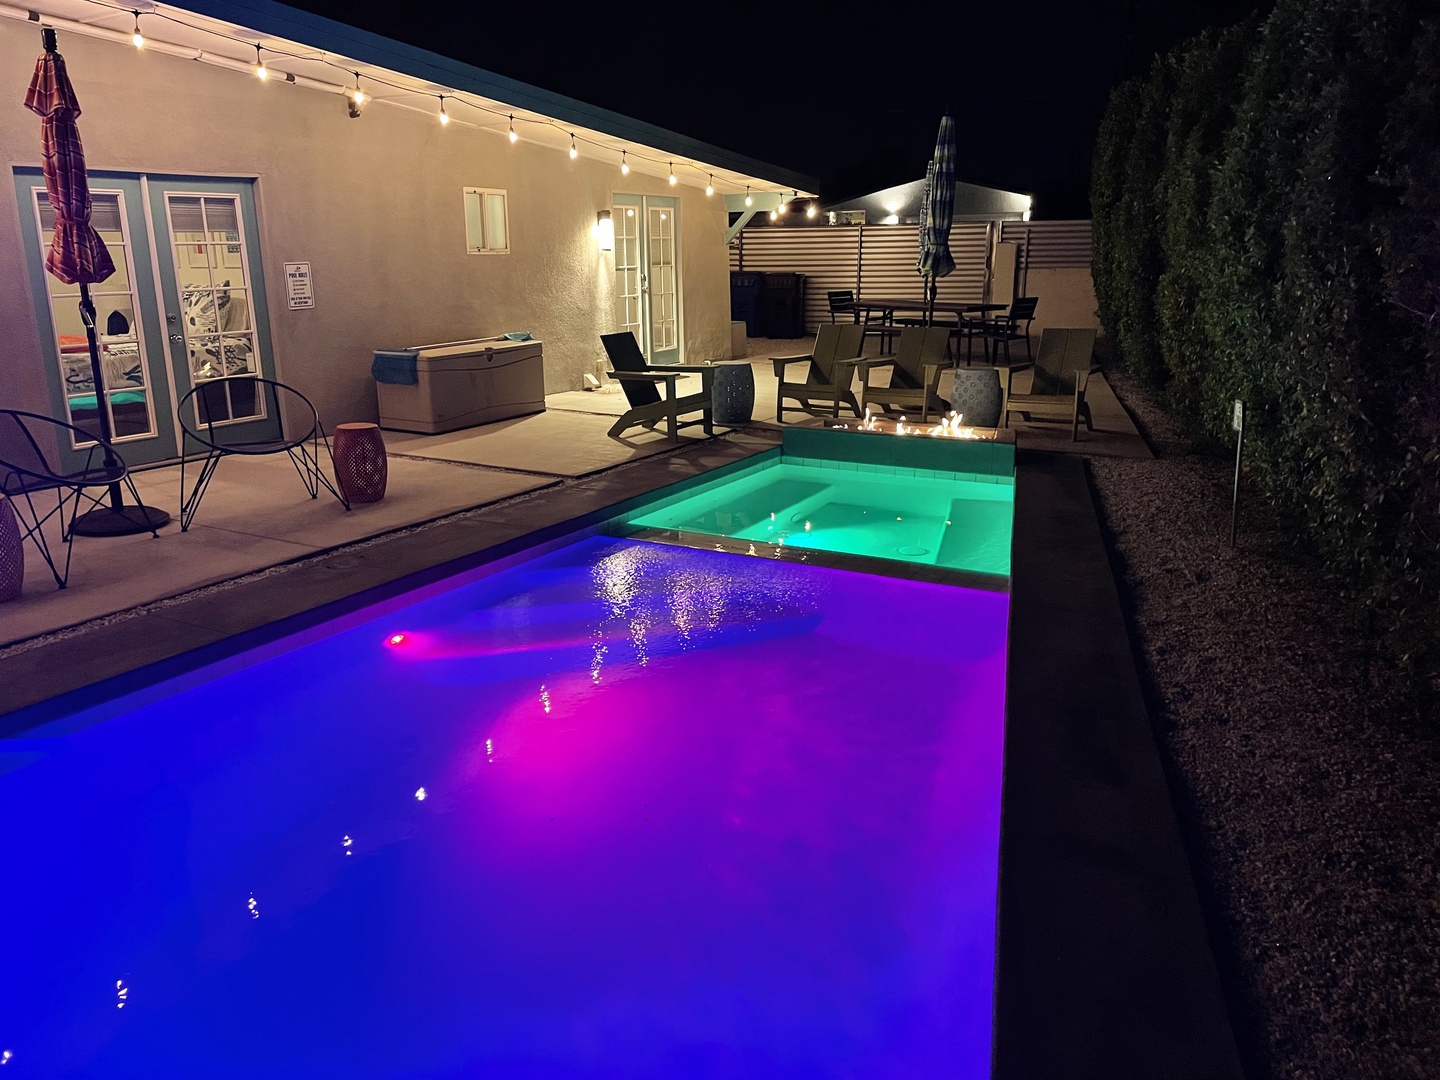 Beautiful lights inside the pool